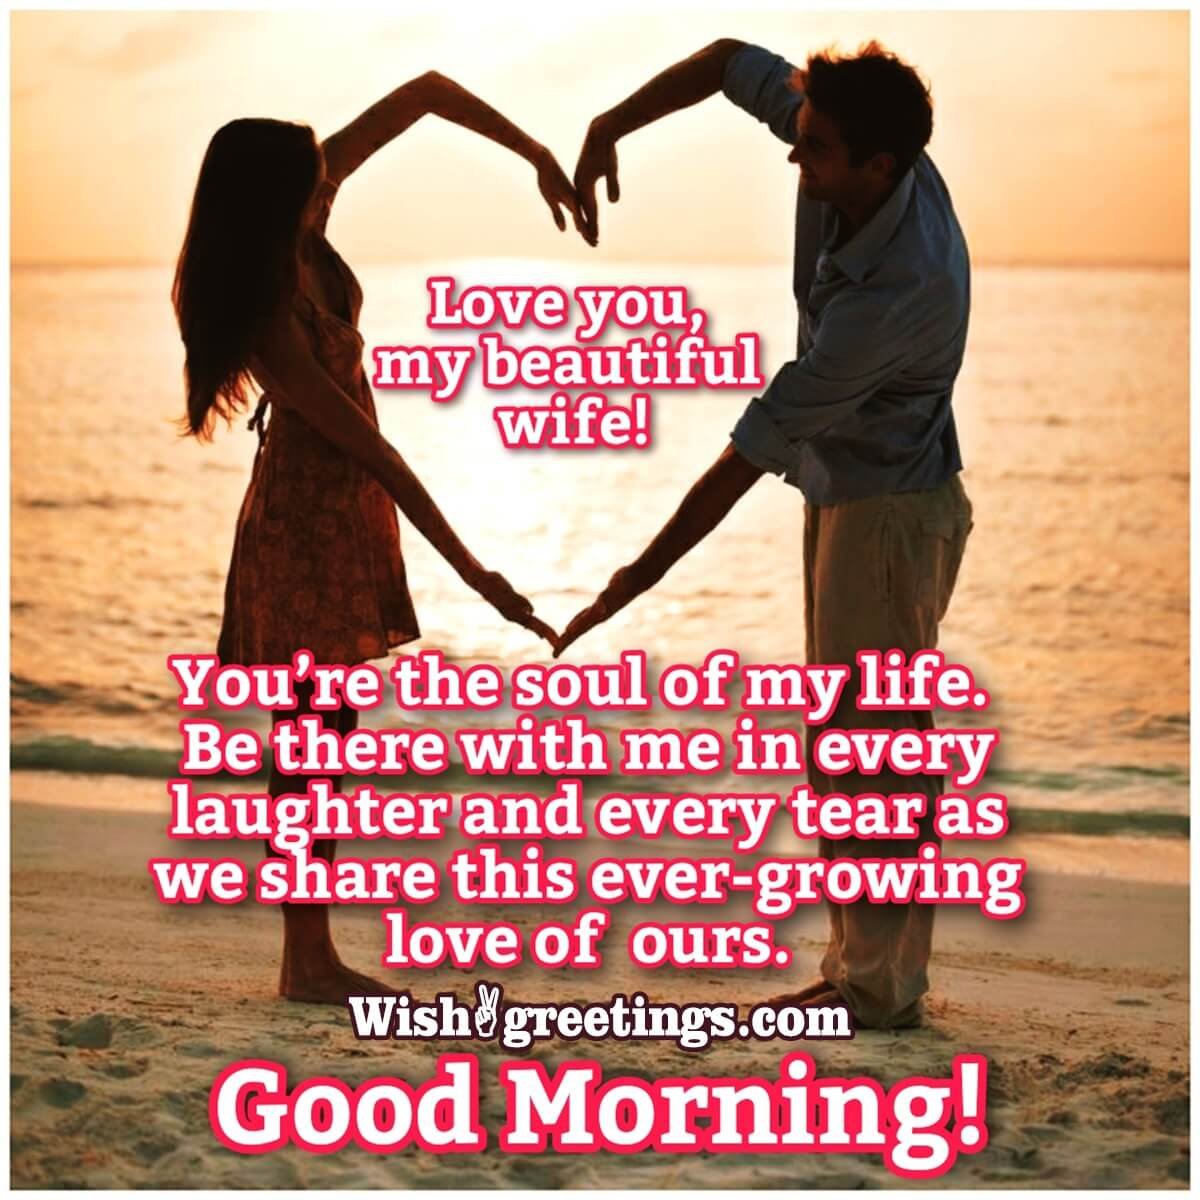 Love You My Beautiful Wife, Good Morning Image